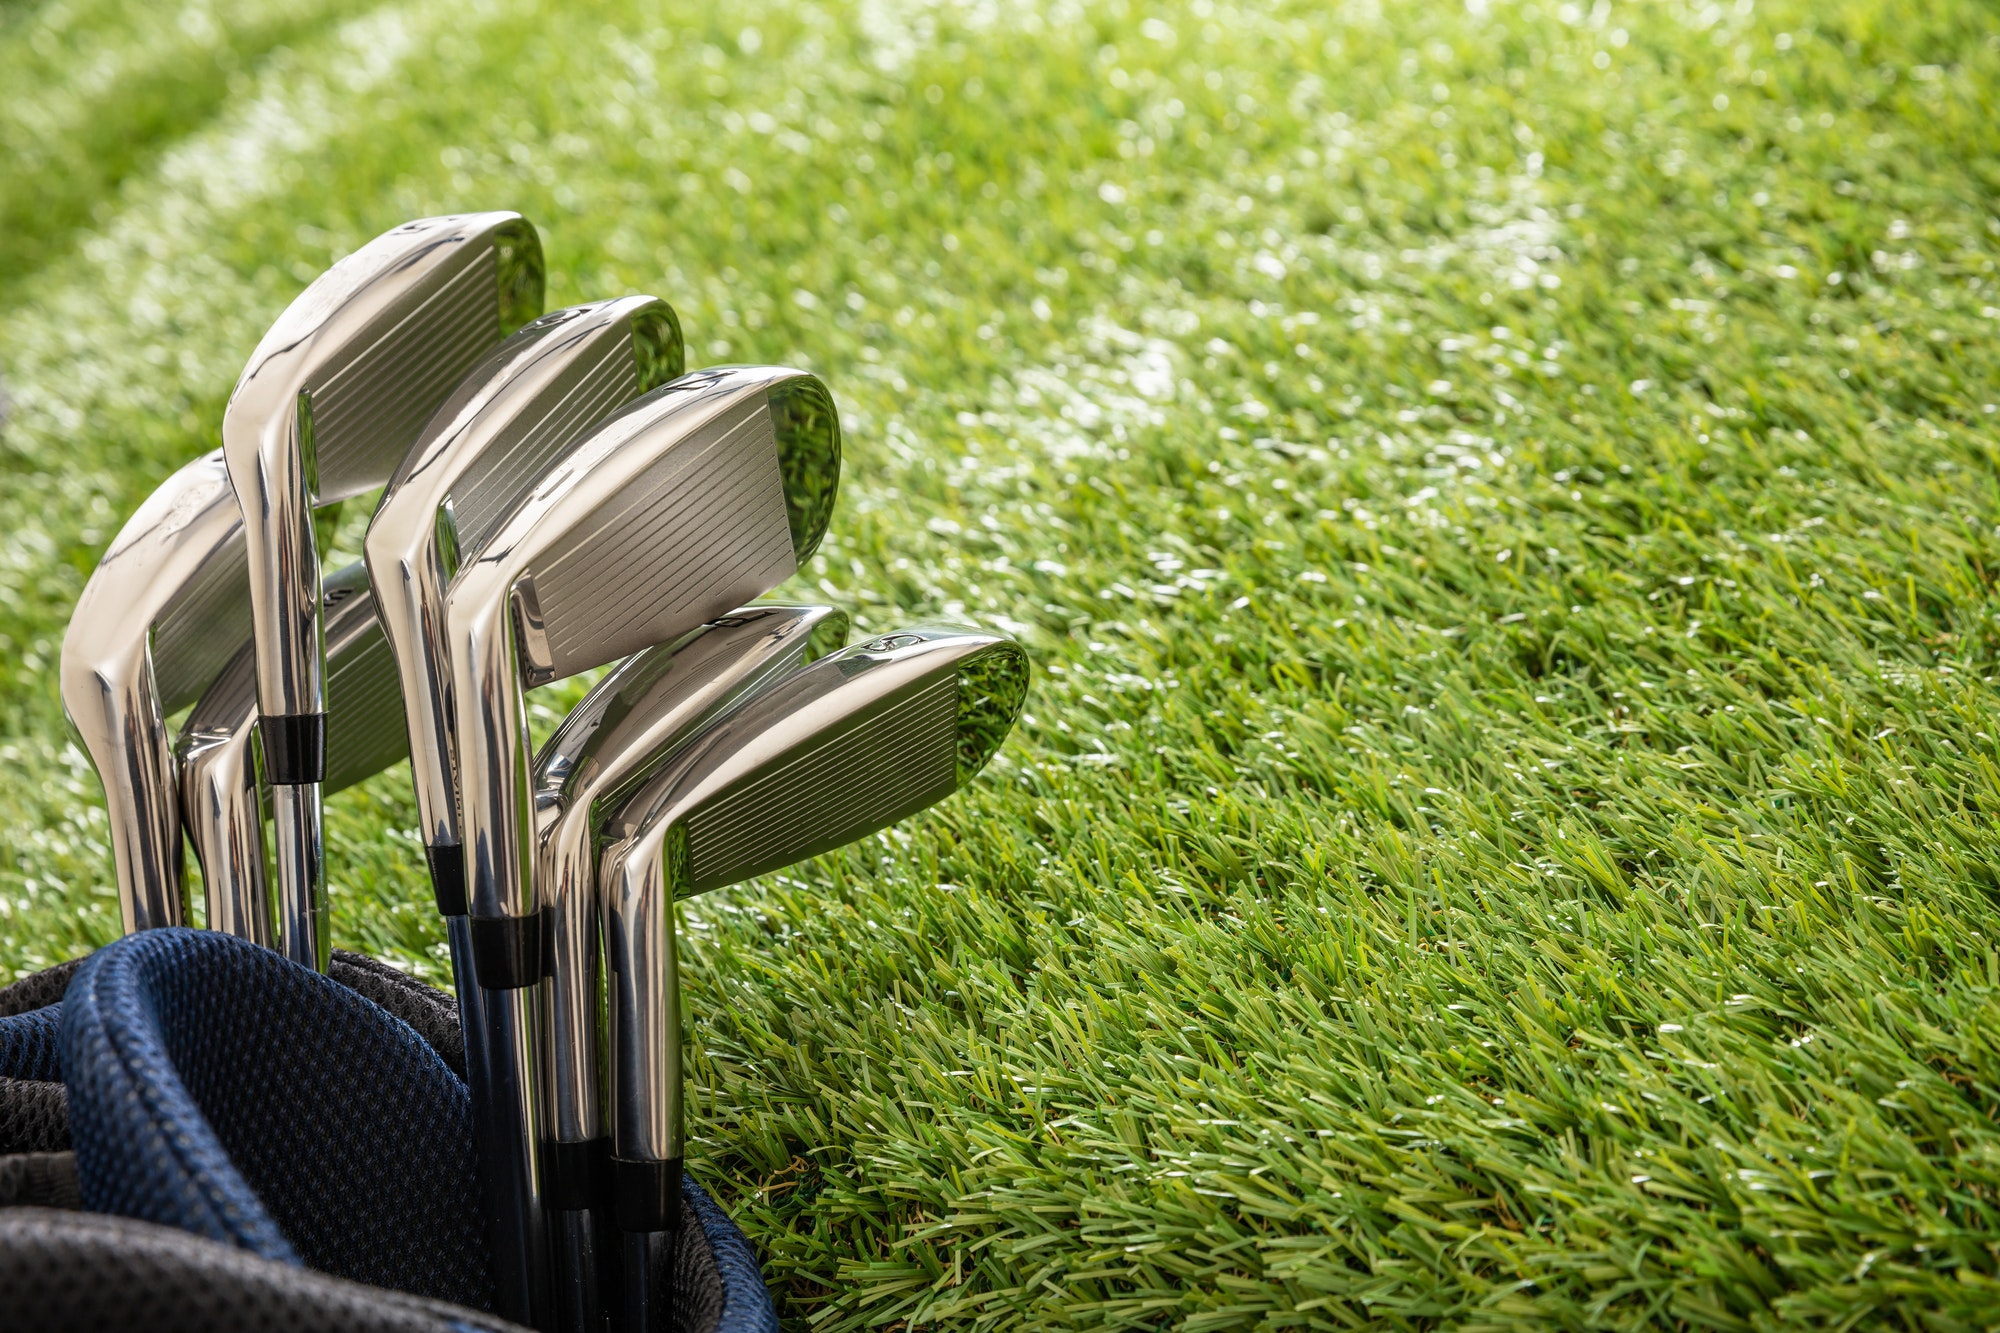 Golf clubs on green grass golf course, close up view.